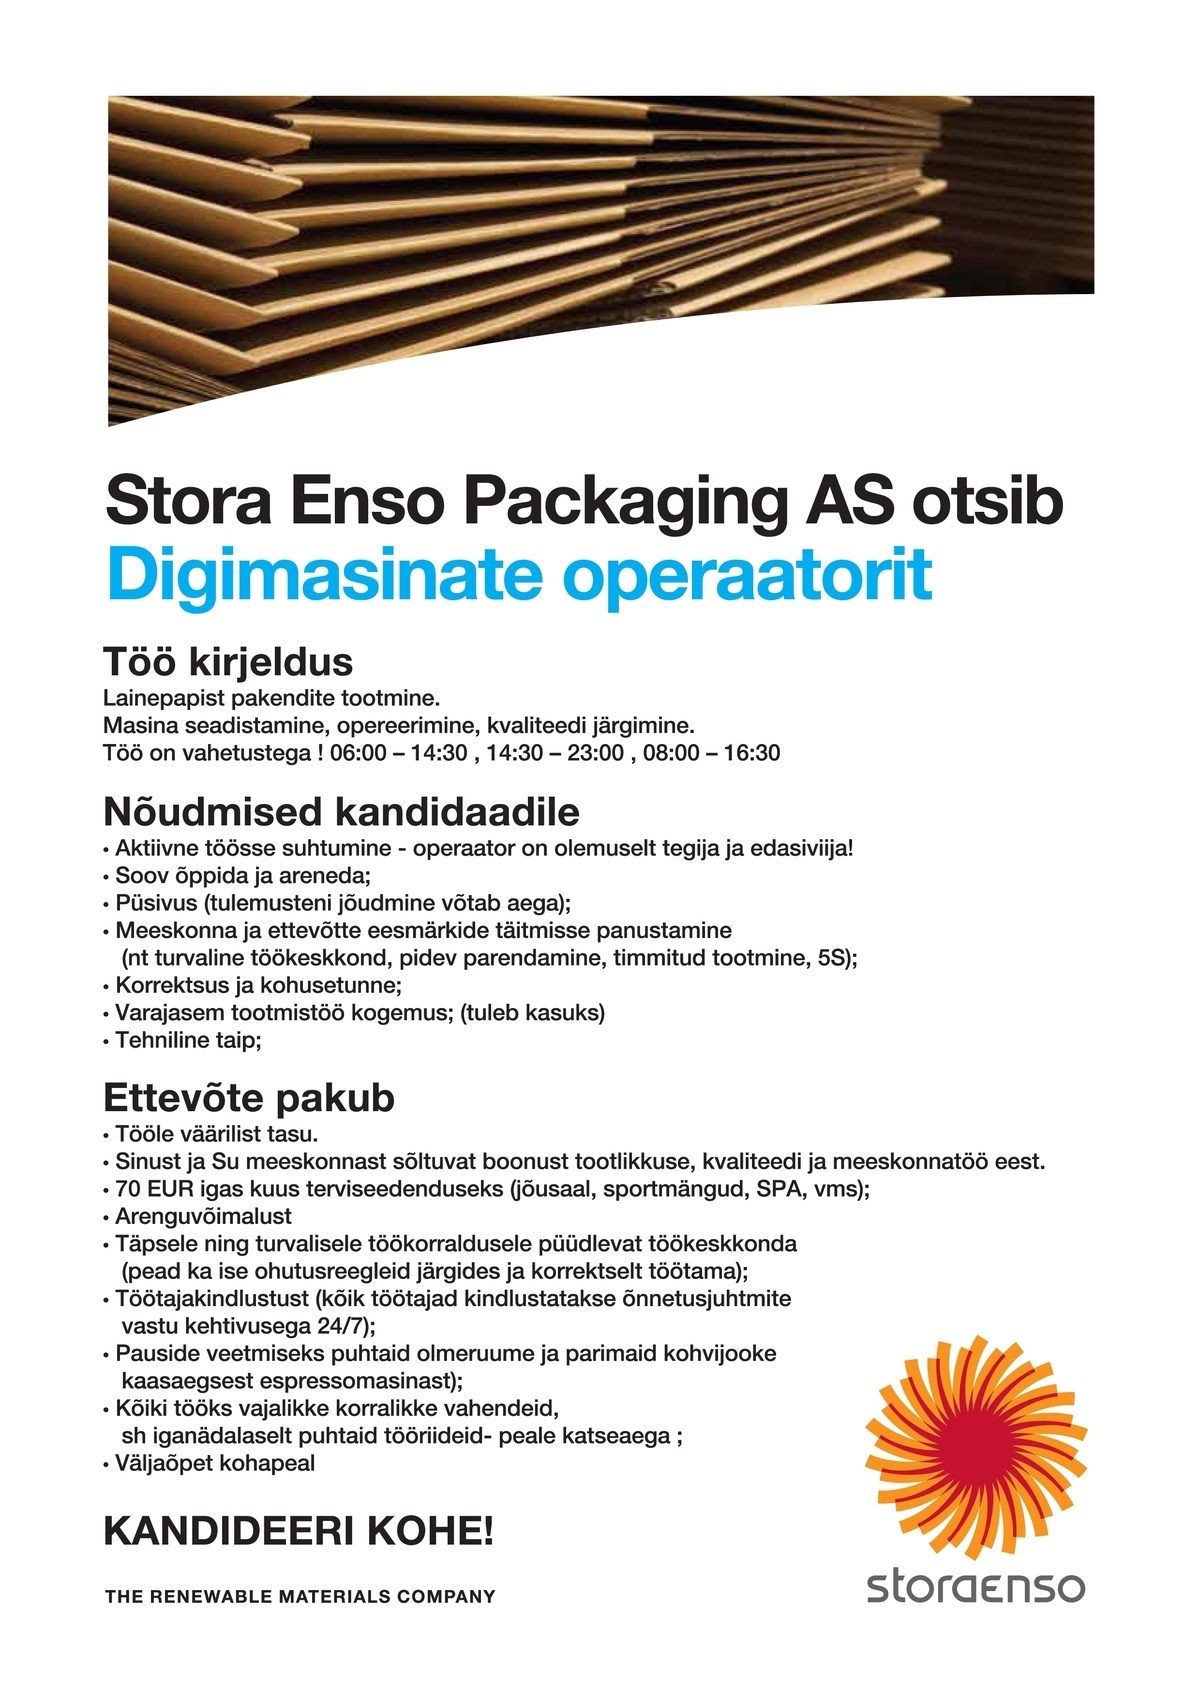 Stora Enso Packaging AS Digimasinate operaator